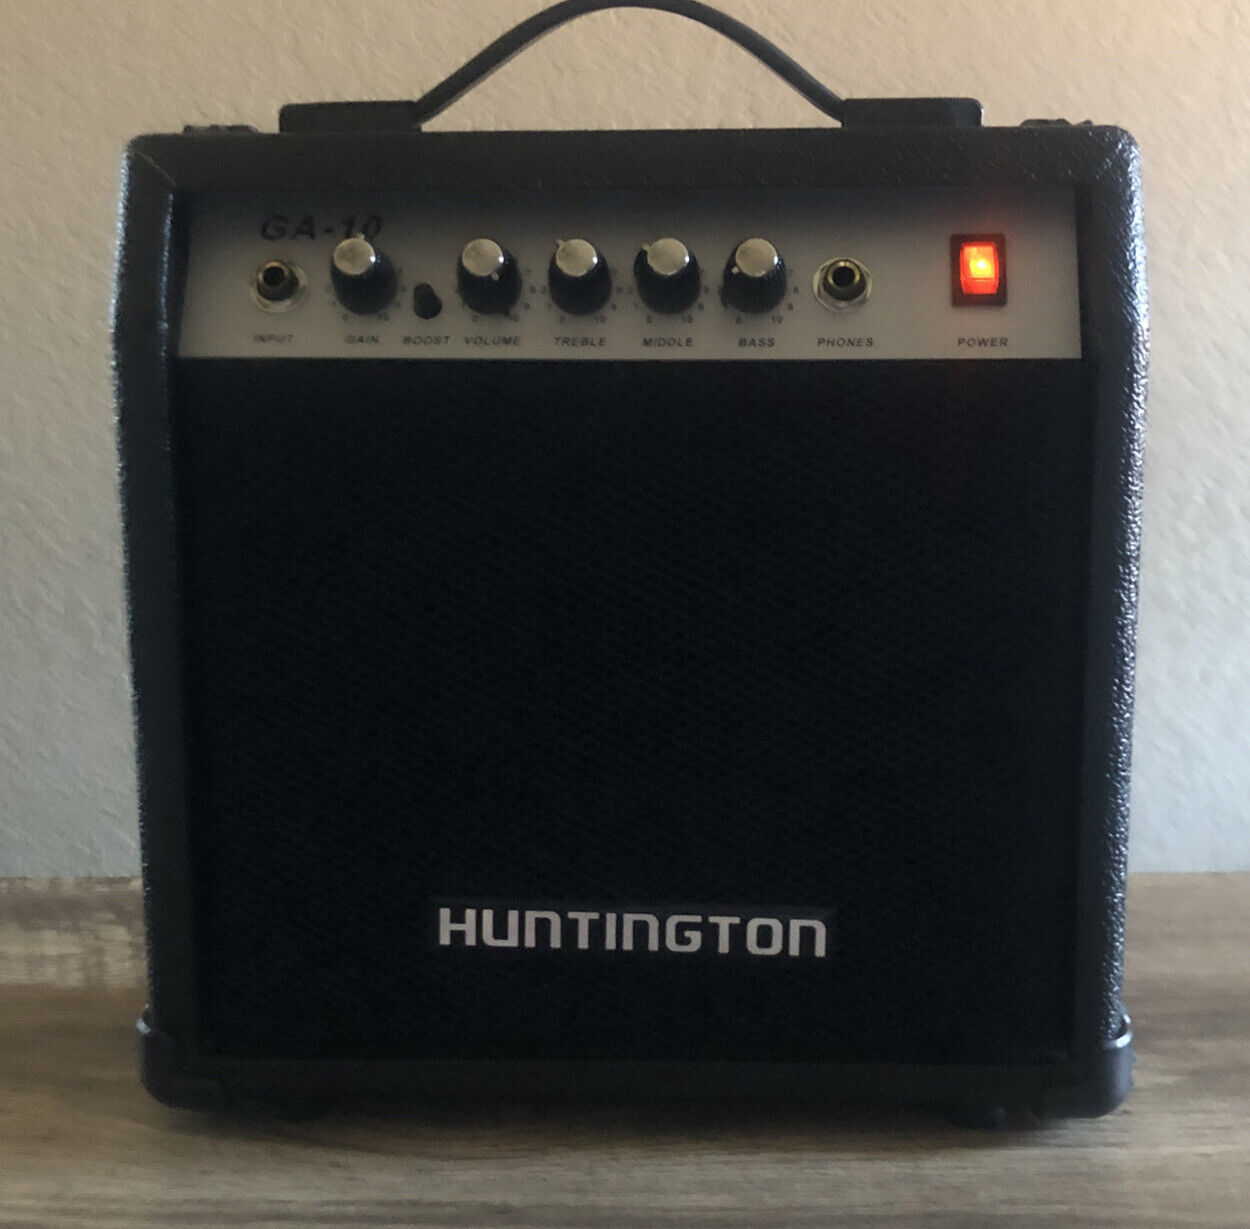 Huntington GA-10 Guitar Amplifier